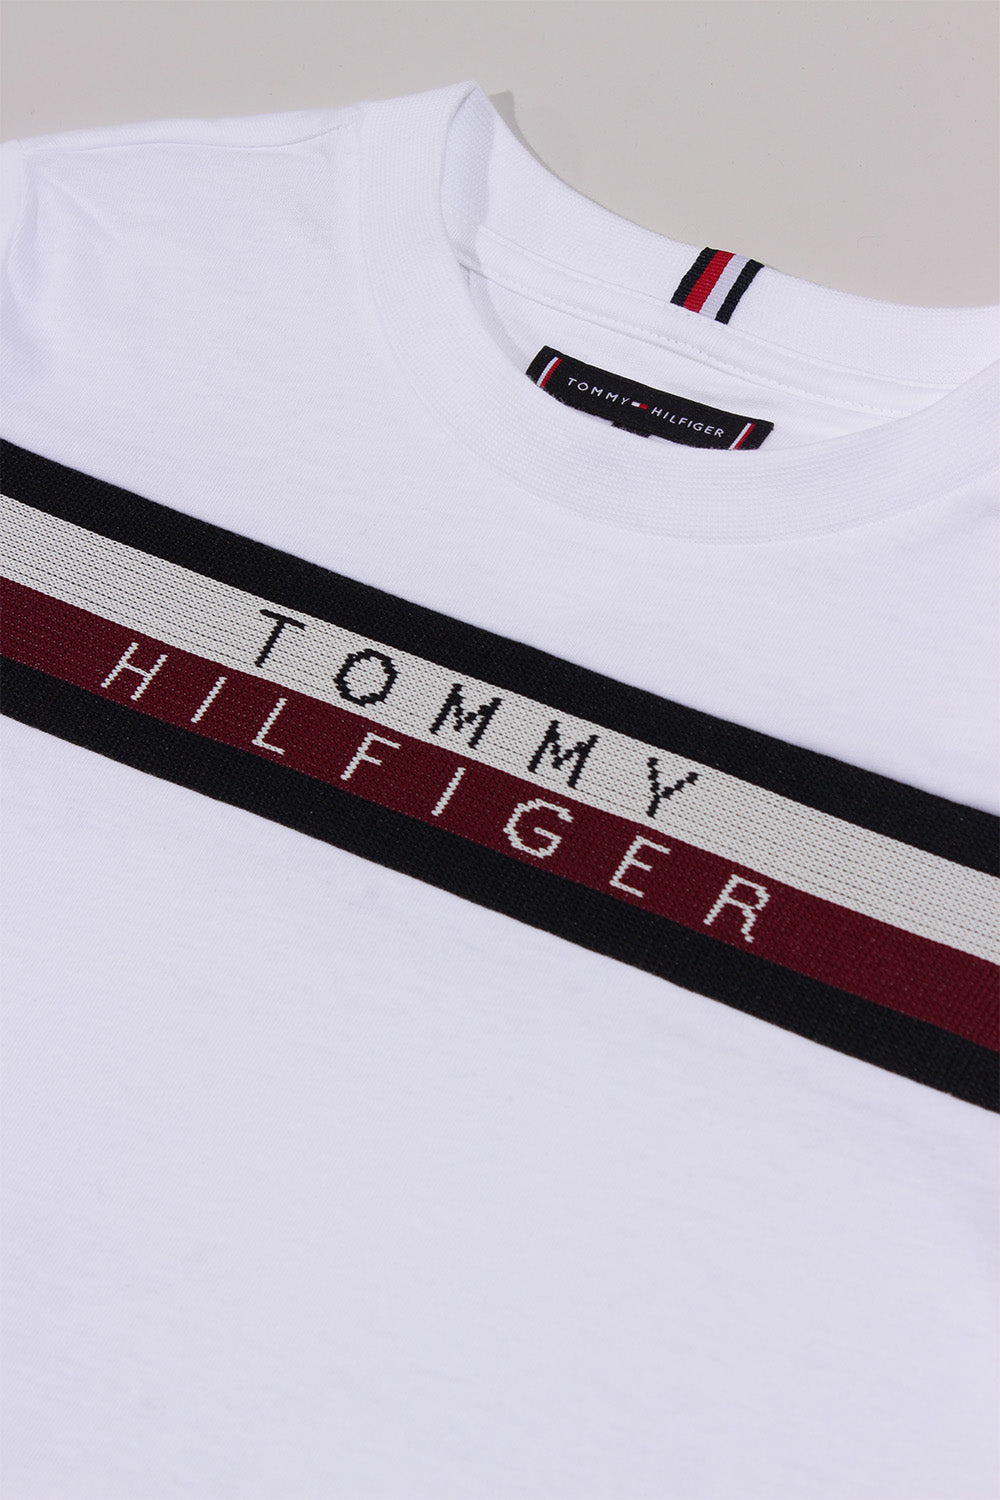 TOMMY HILFIGER T-SHIRT